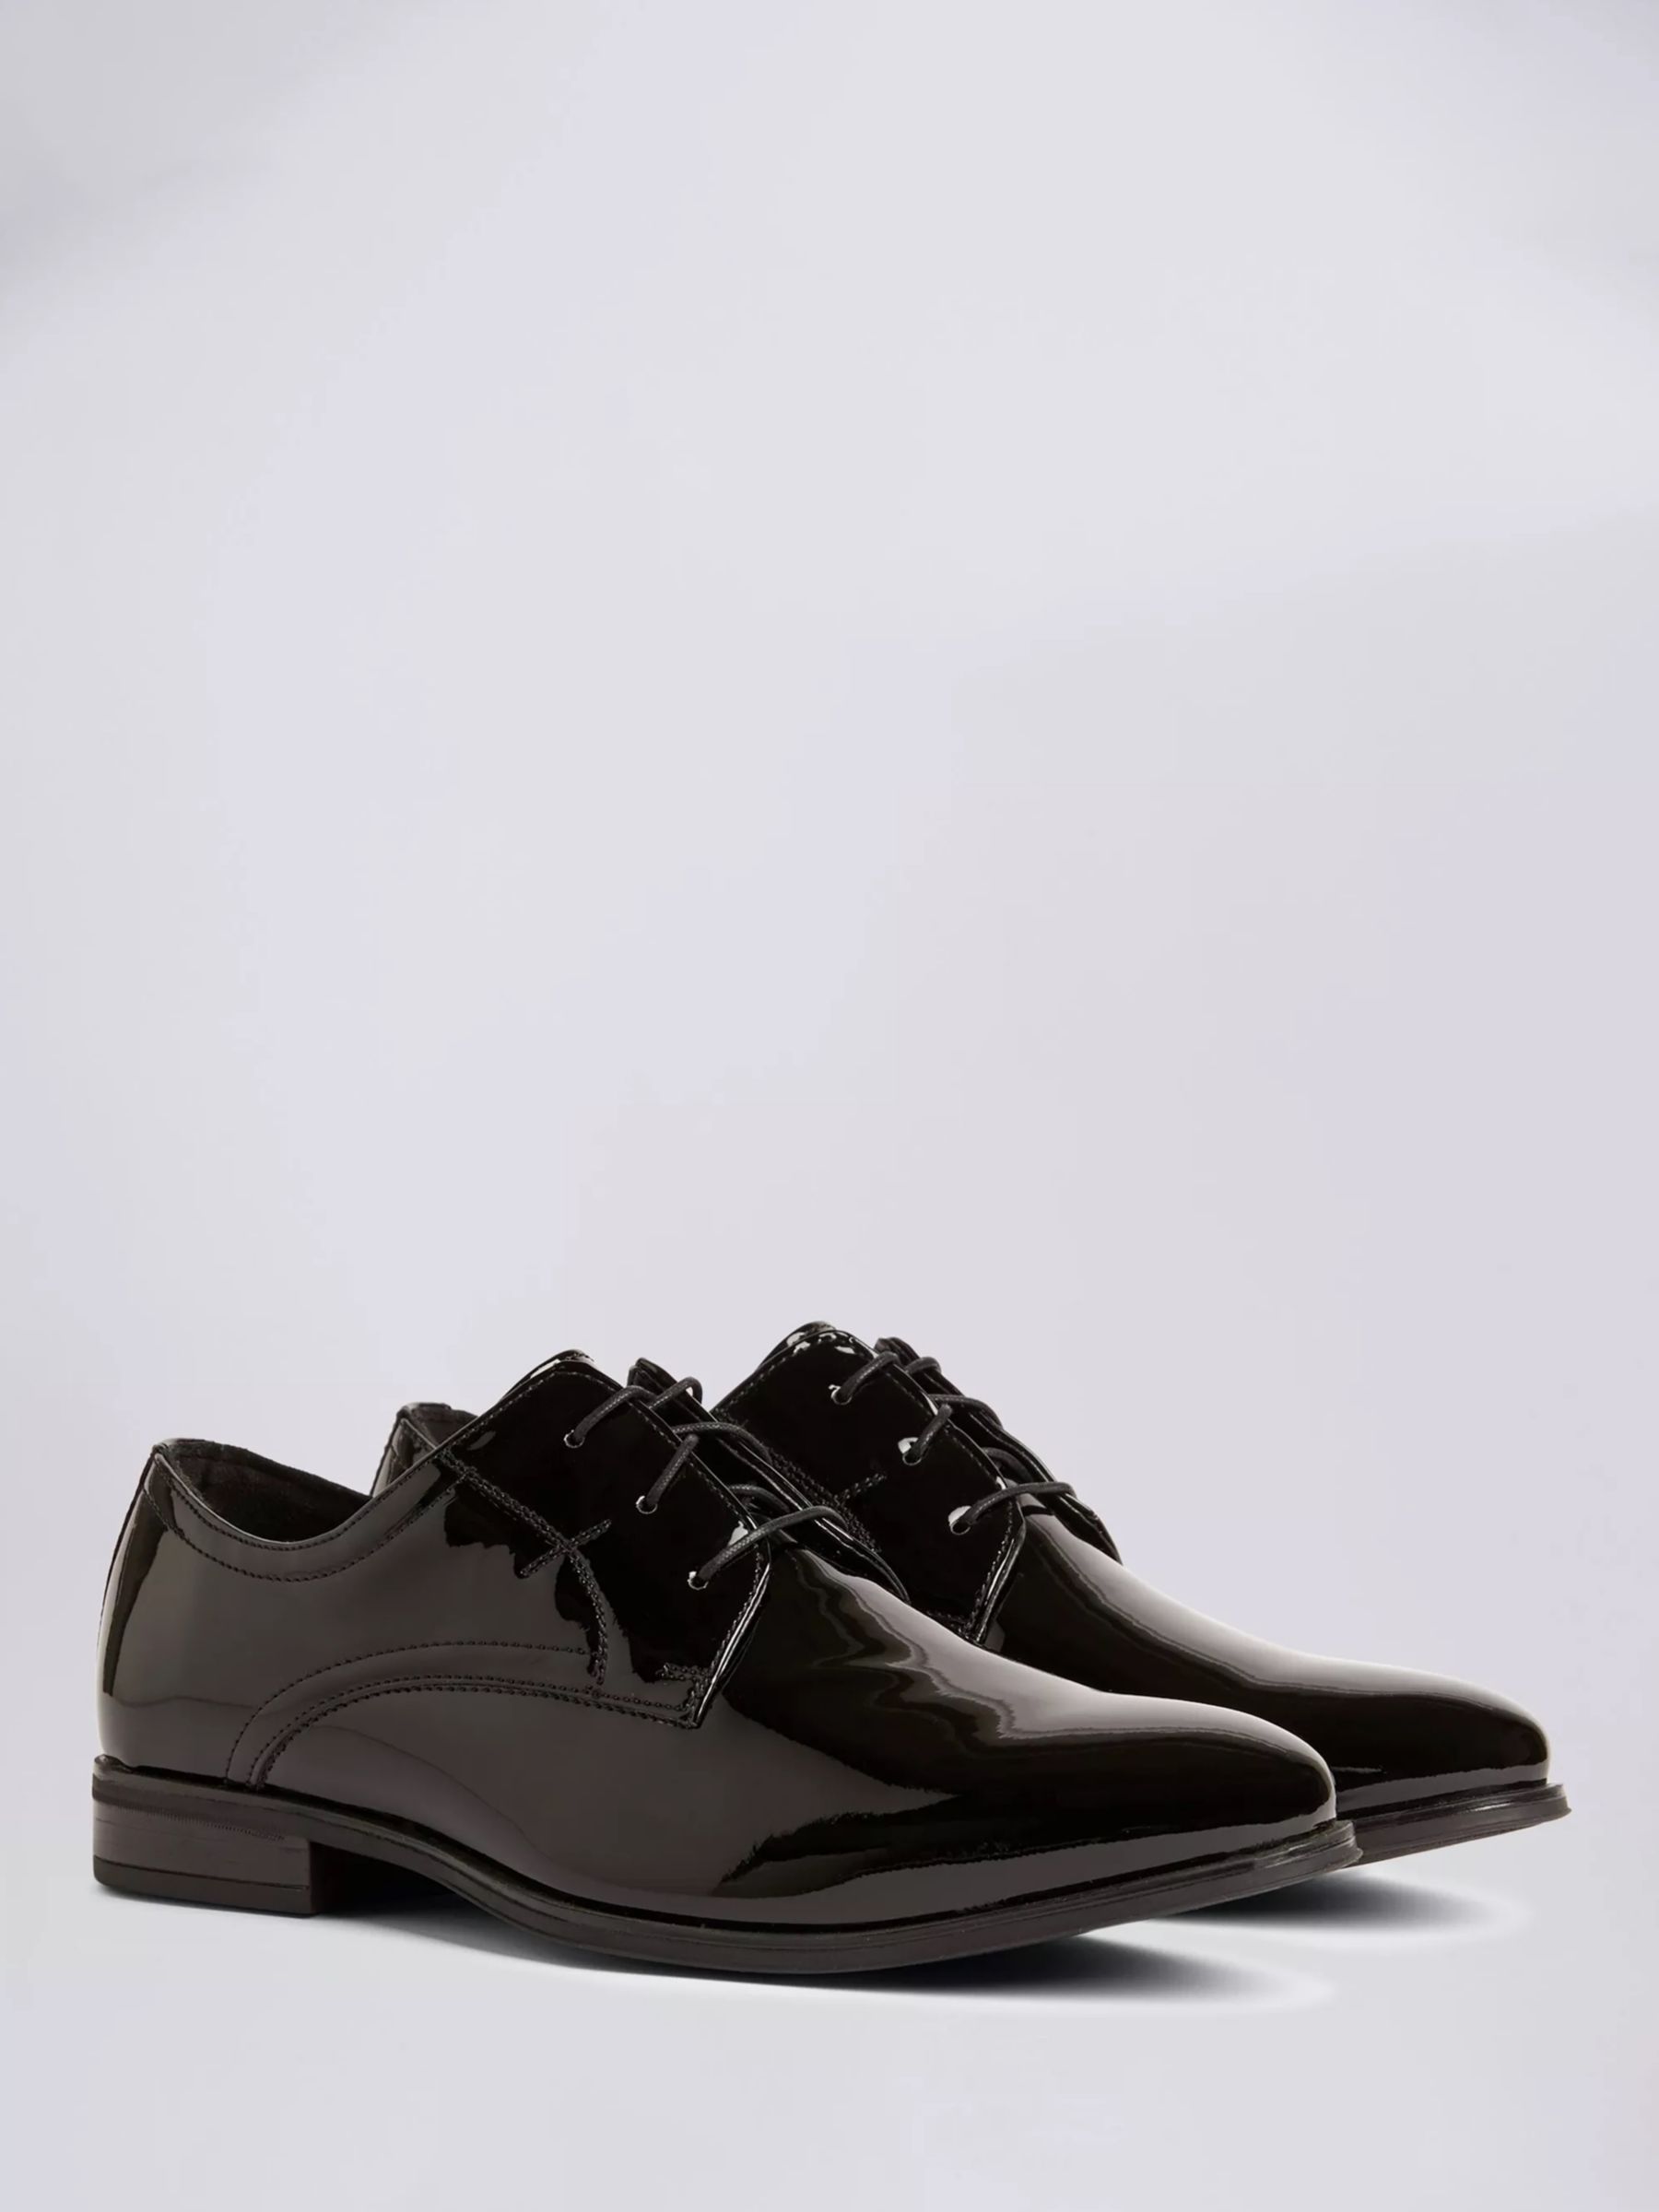 Moss Mayfair Patent Dress Shoes, Black at John Lewis & Partners